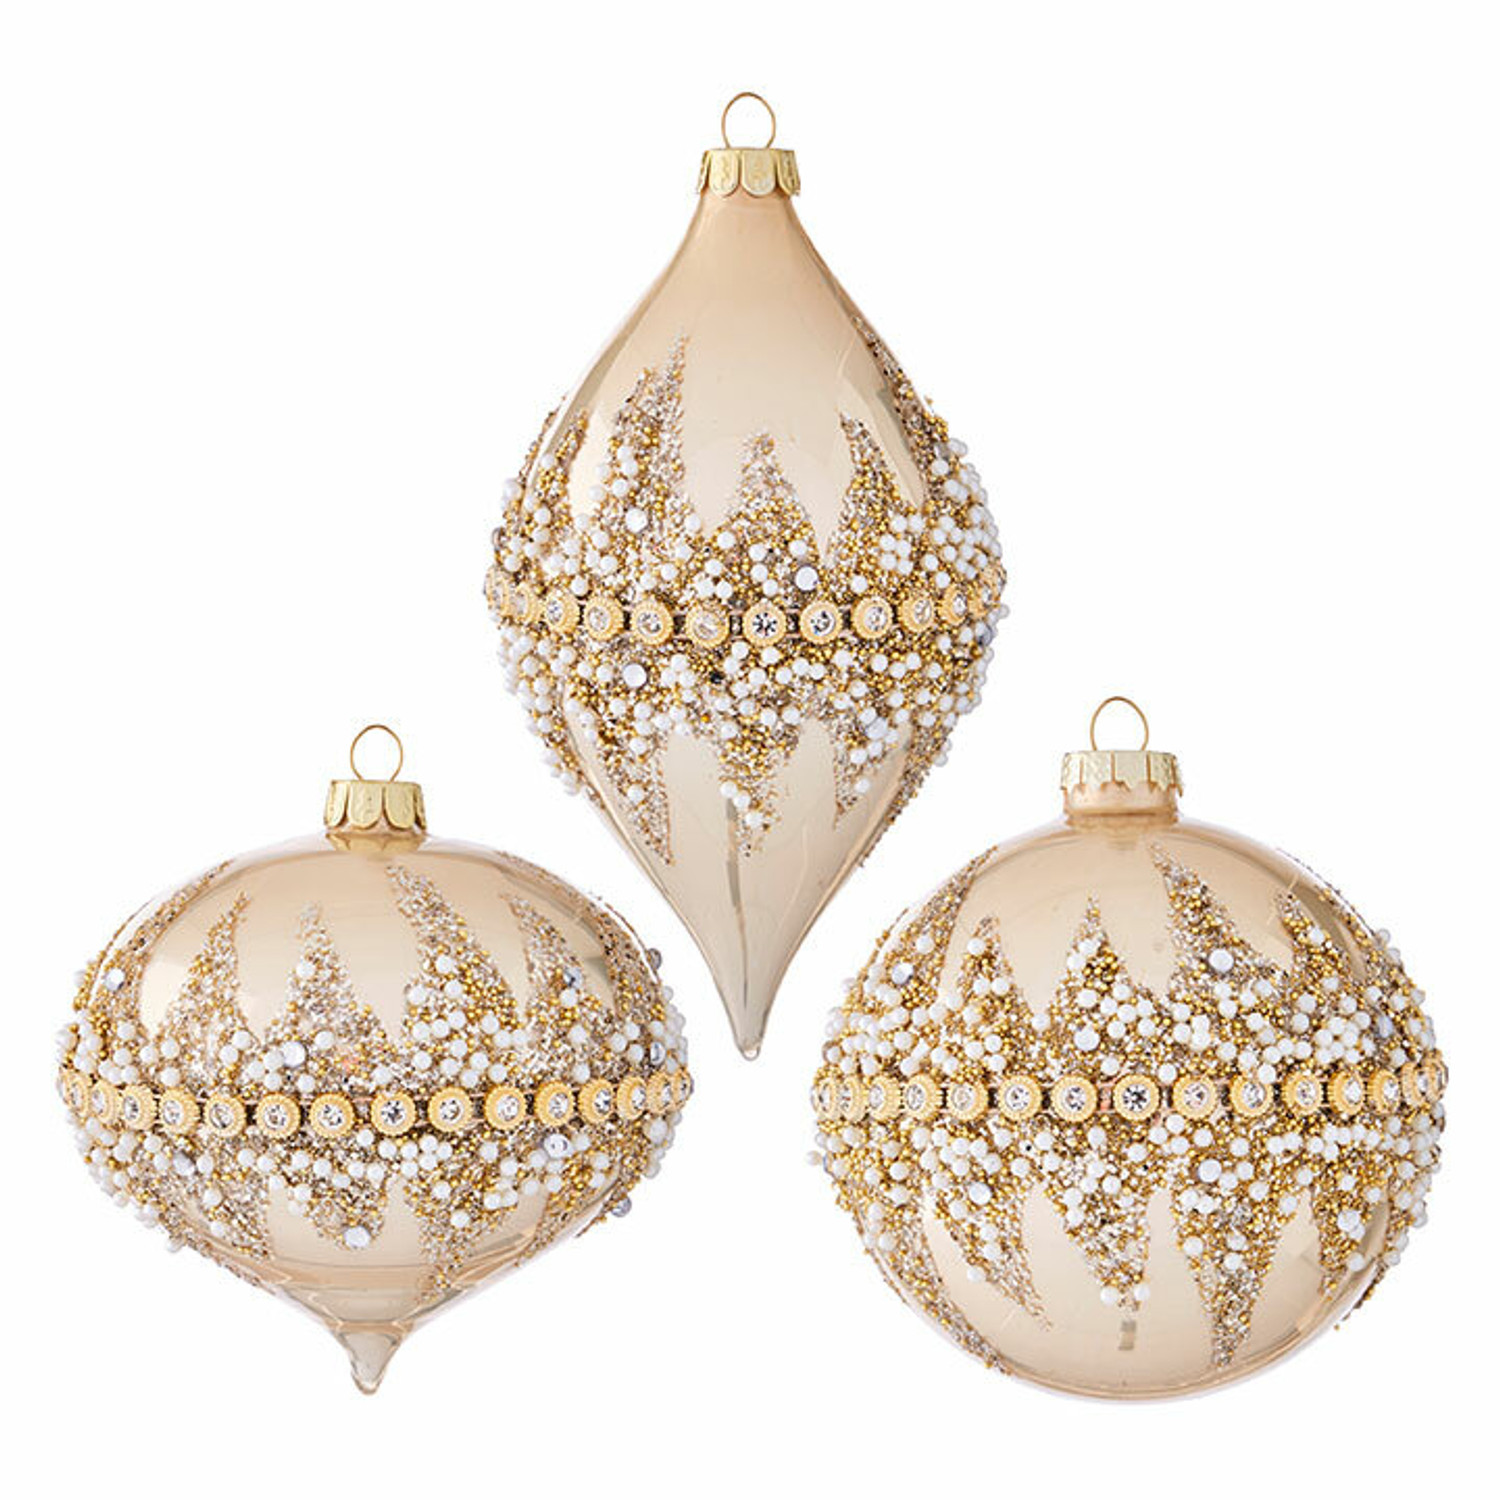 Gold Ornament Caps - Howaco Glass